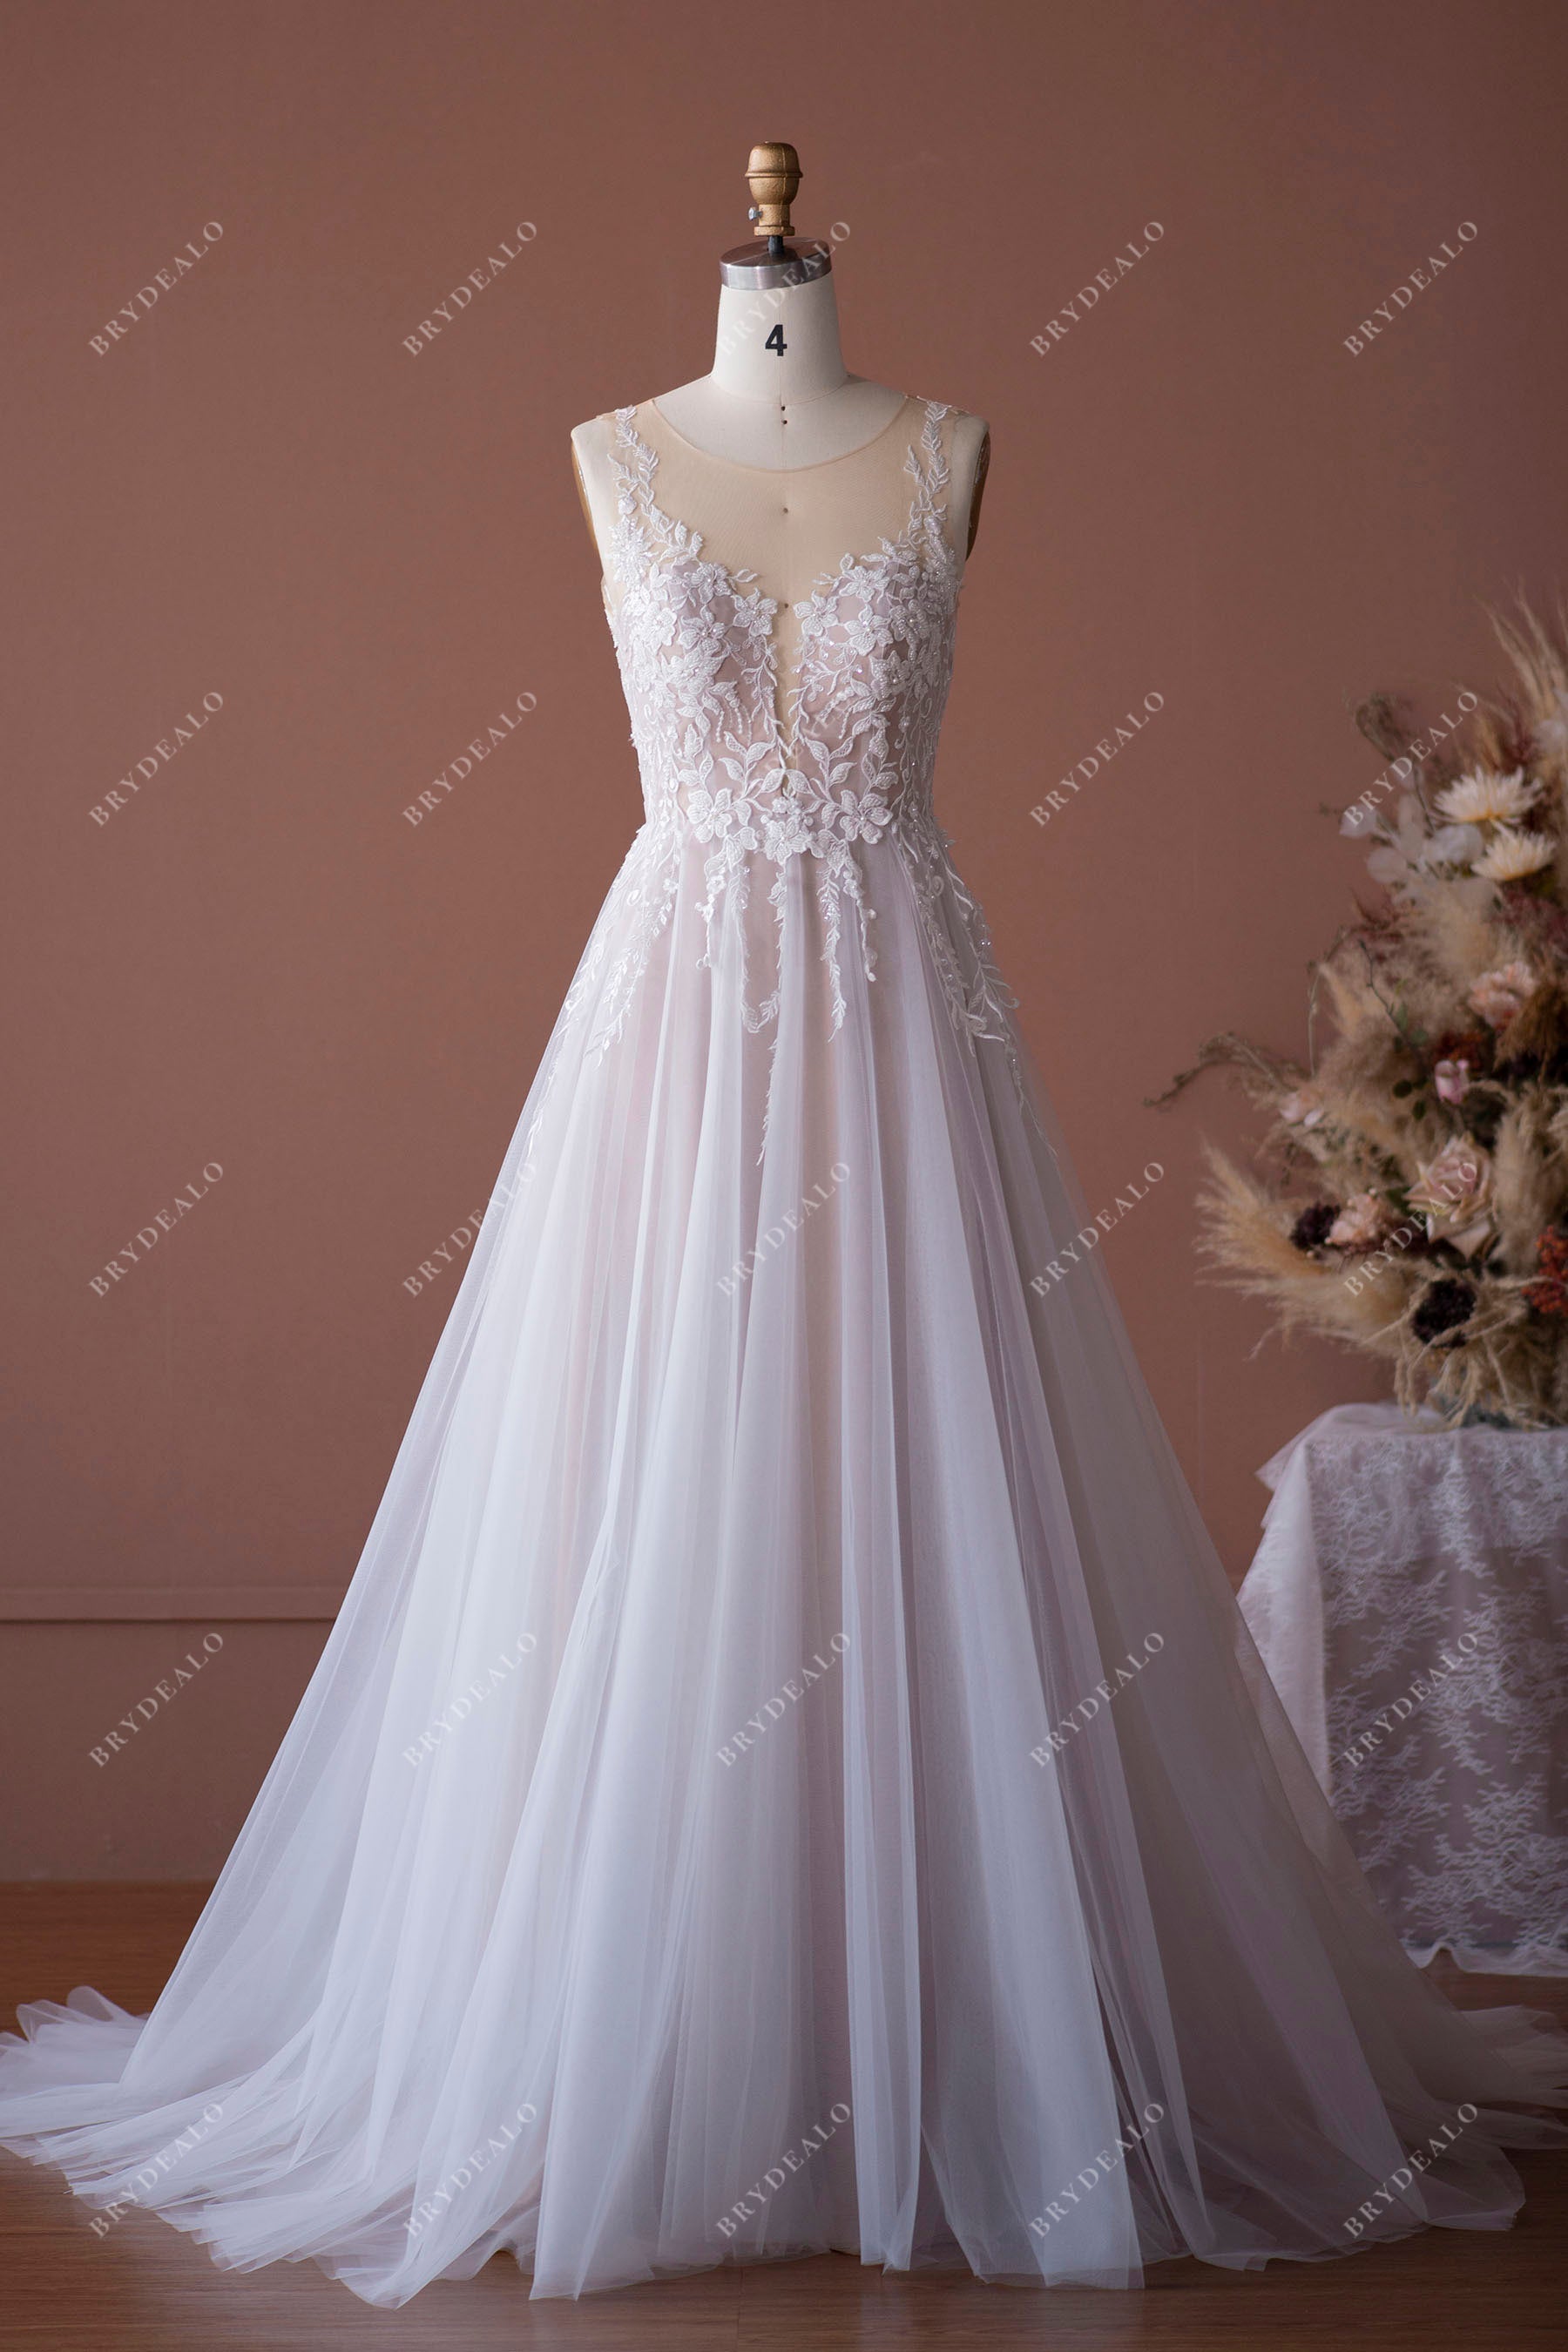 Nude Beige Sleeveless Romantic Beaded Lace A-line Bridal Dress